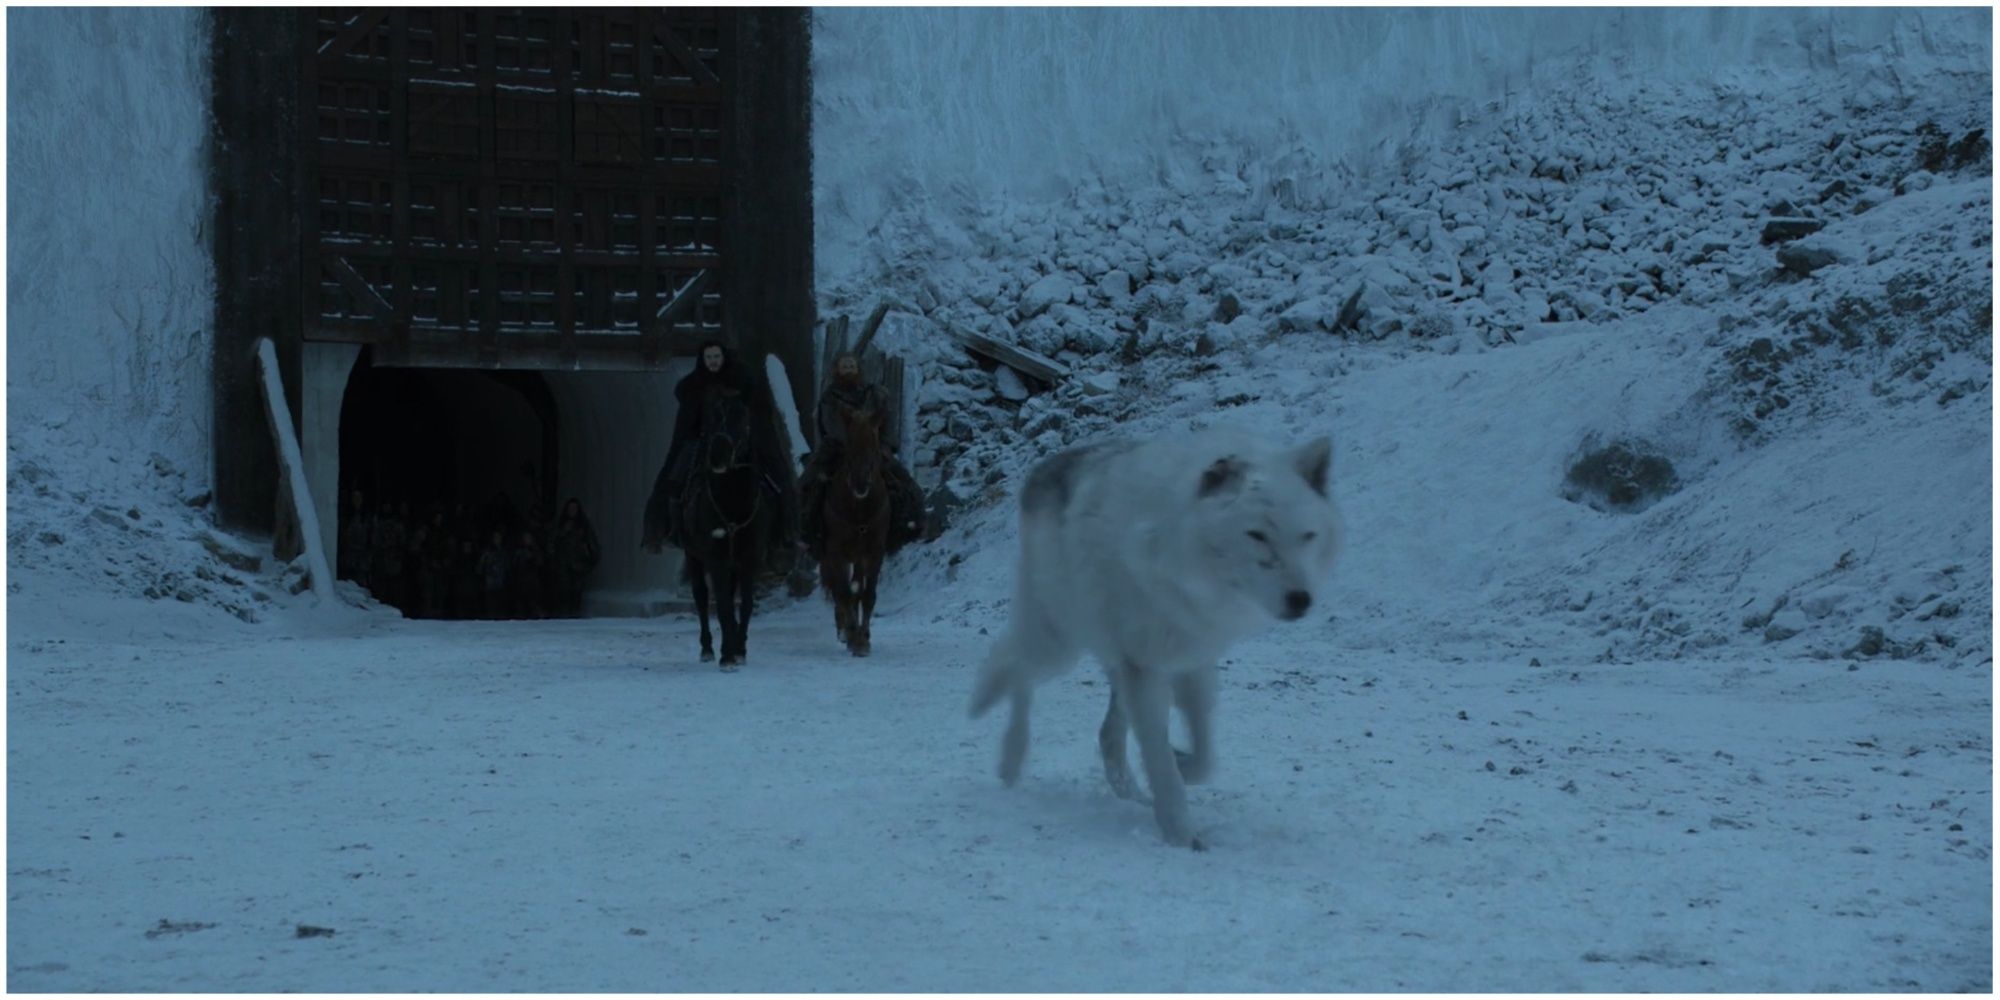 Jon Snow Tormund Giantsbane and Ghost leaving Castle Black in Game of Thrones.